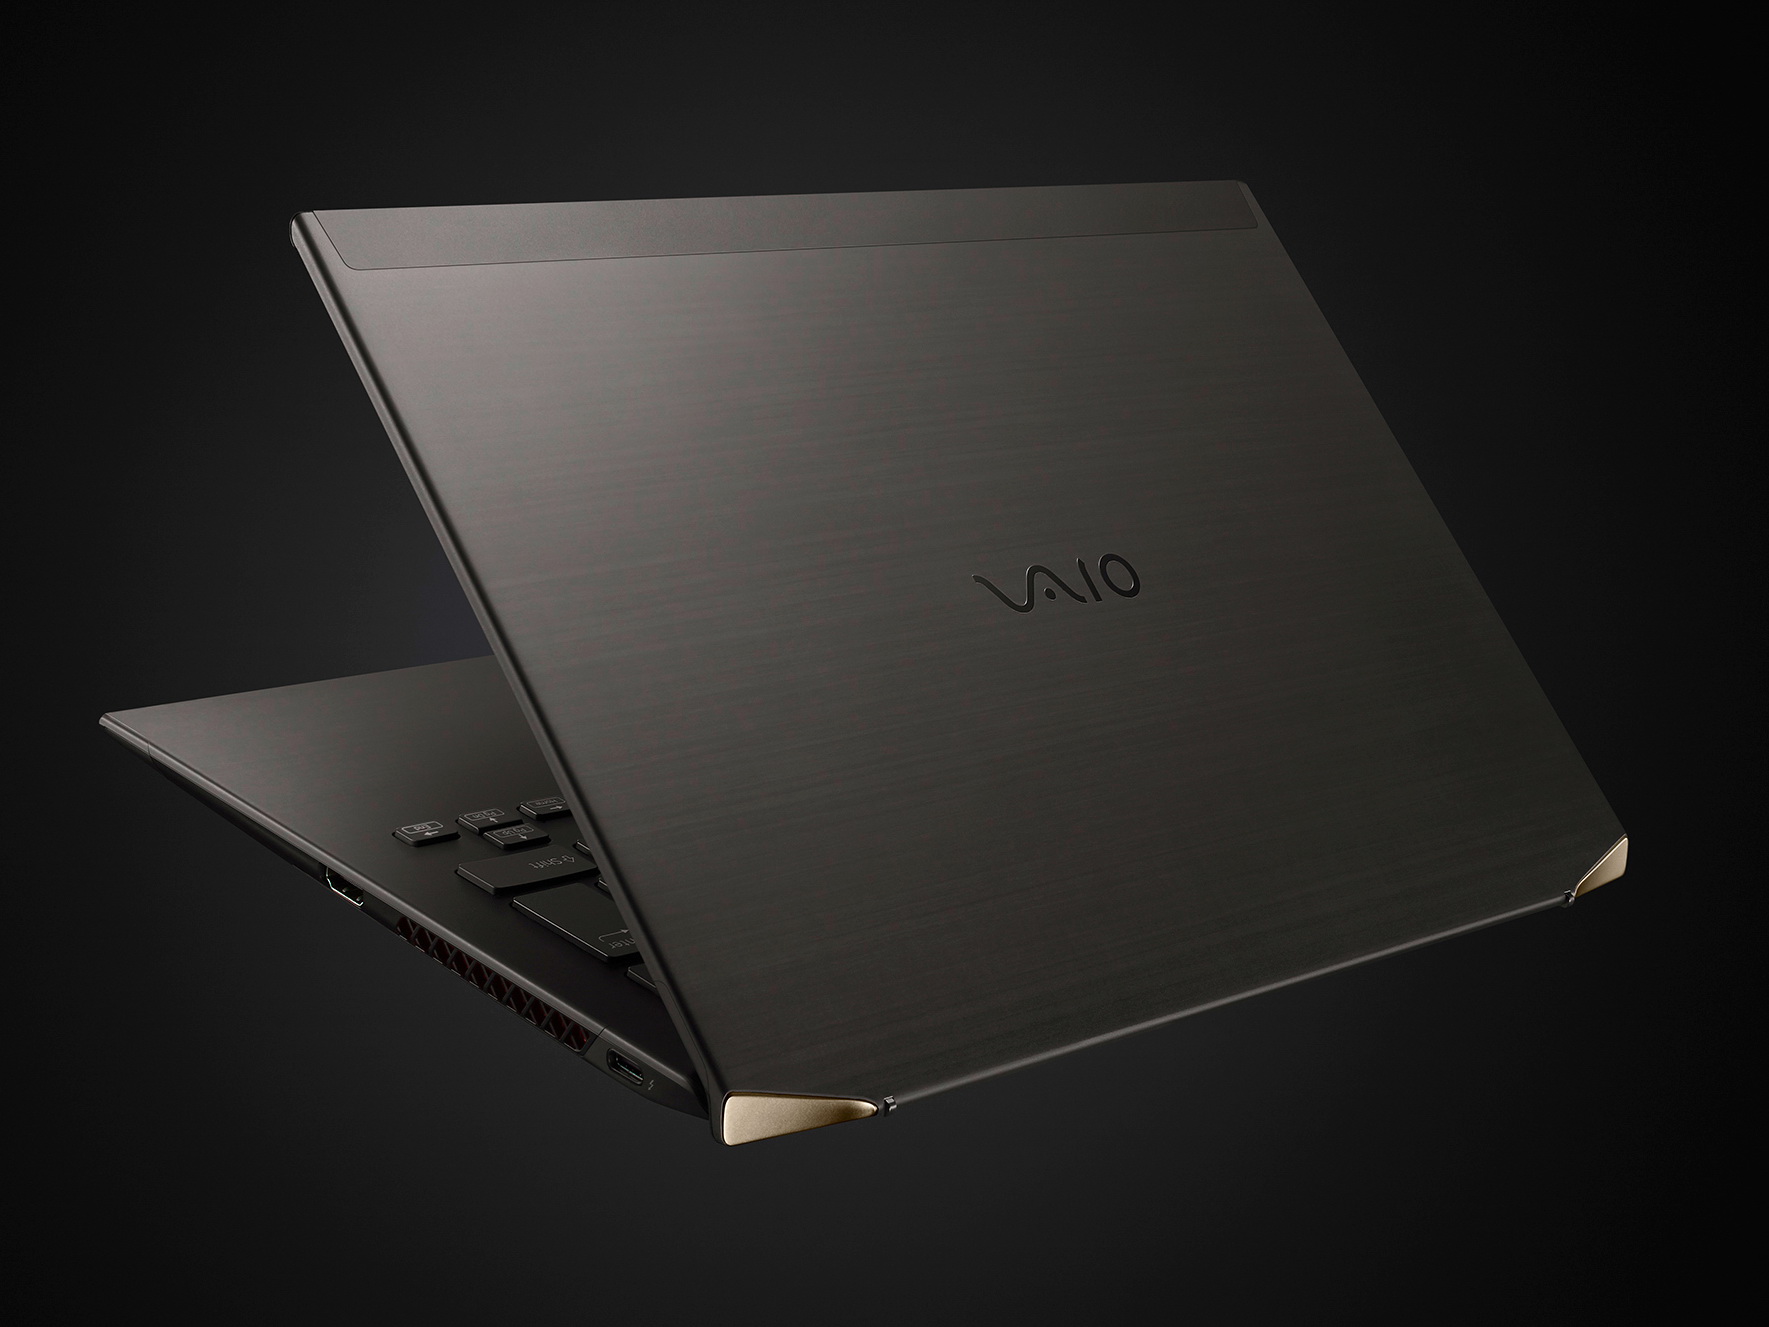 VAIO售價過萬港元的手提電腦，全部均在日本的工場製造，故此售價也特別驚人。（Sony網上圖片）